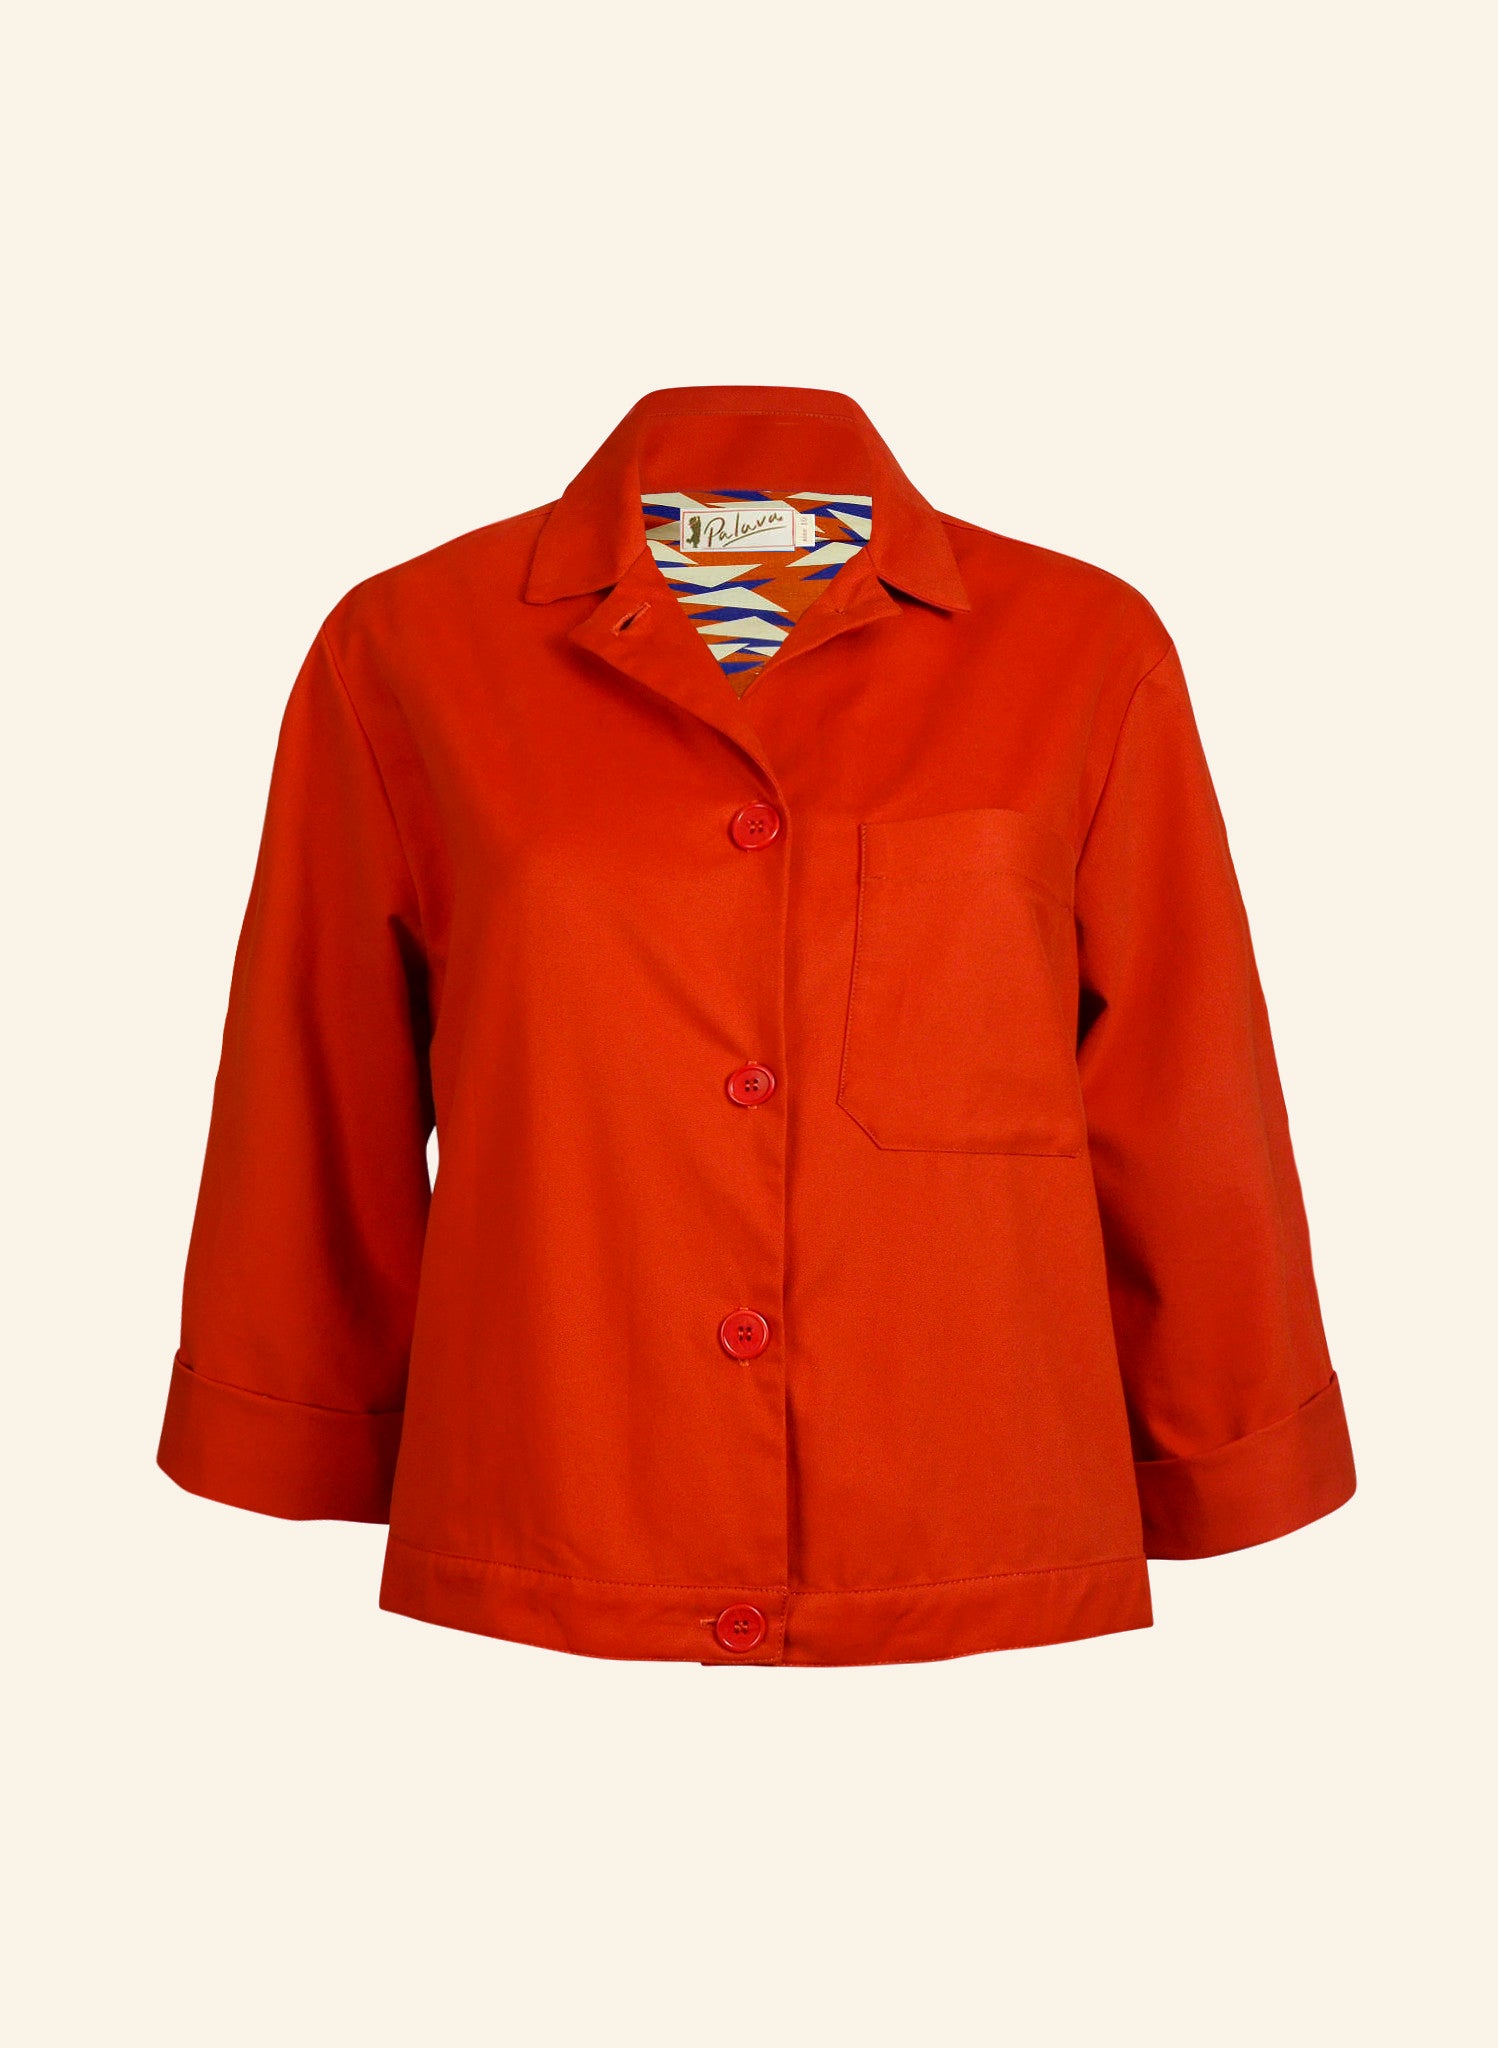 Walter Workwear Jacket - Red Cotton